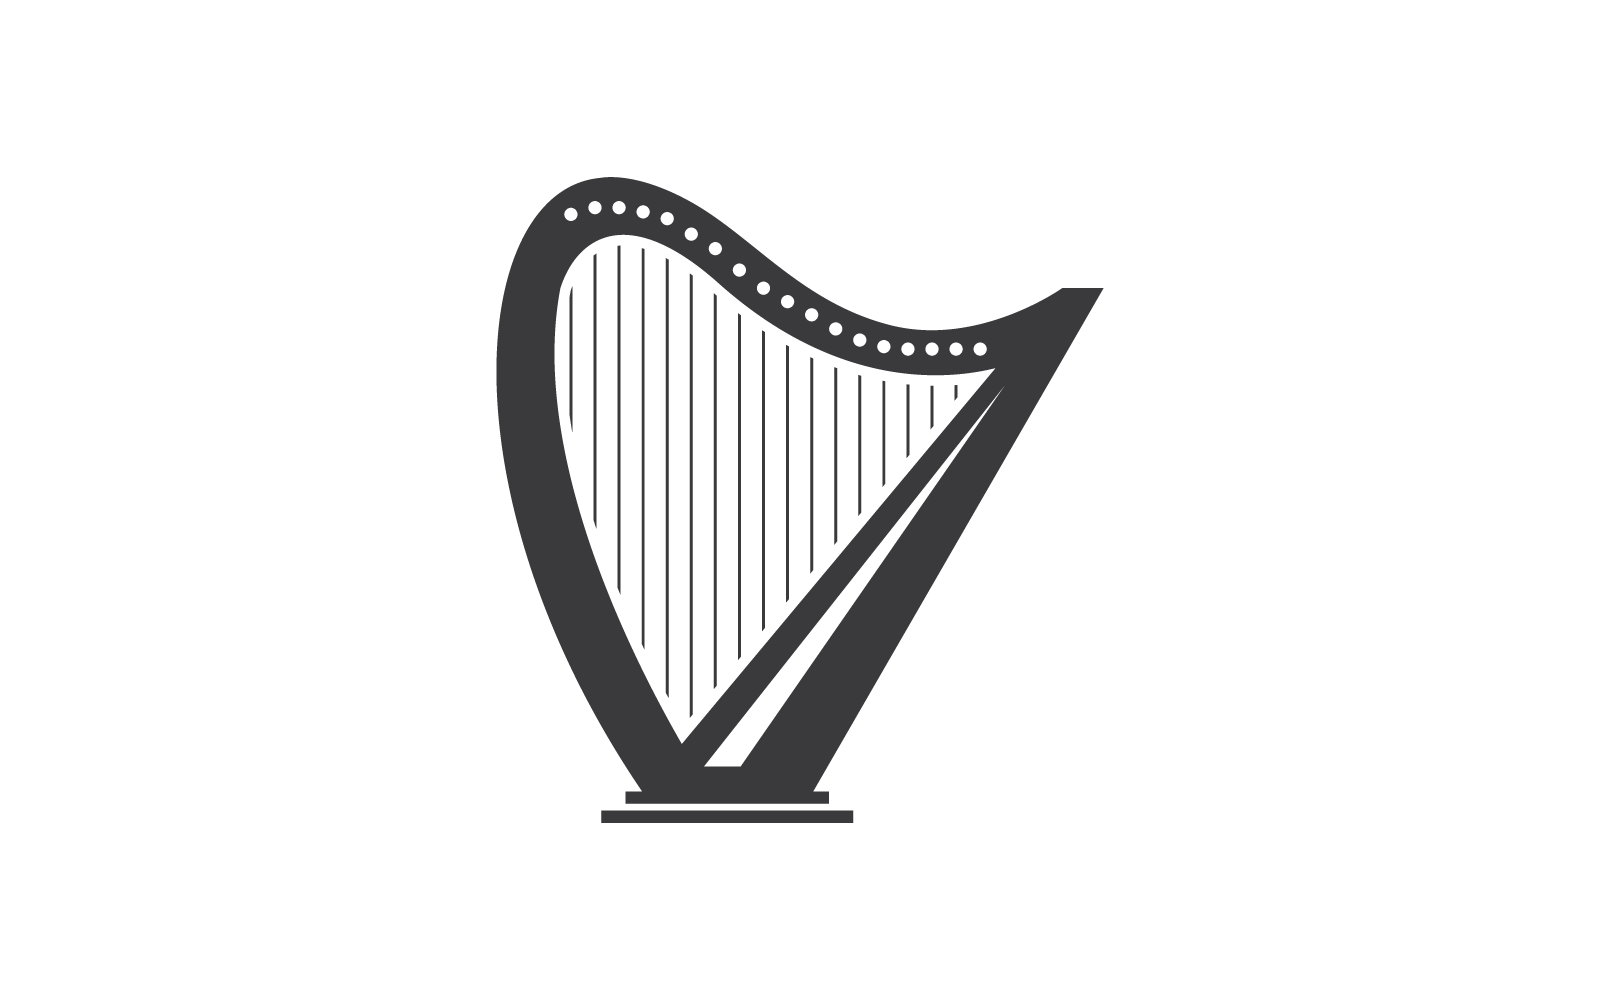 Harp illustration logo vector design Logo Template